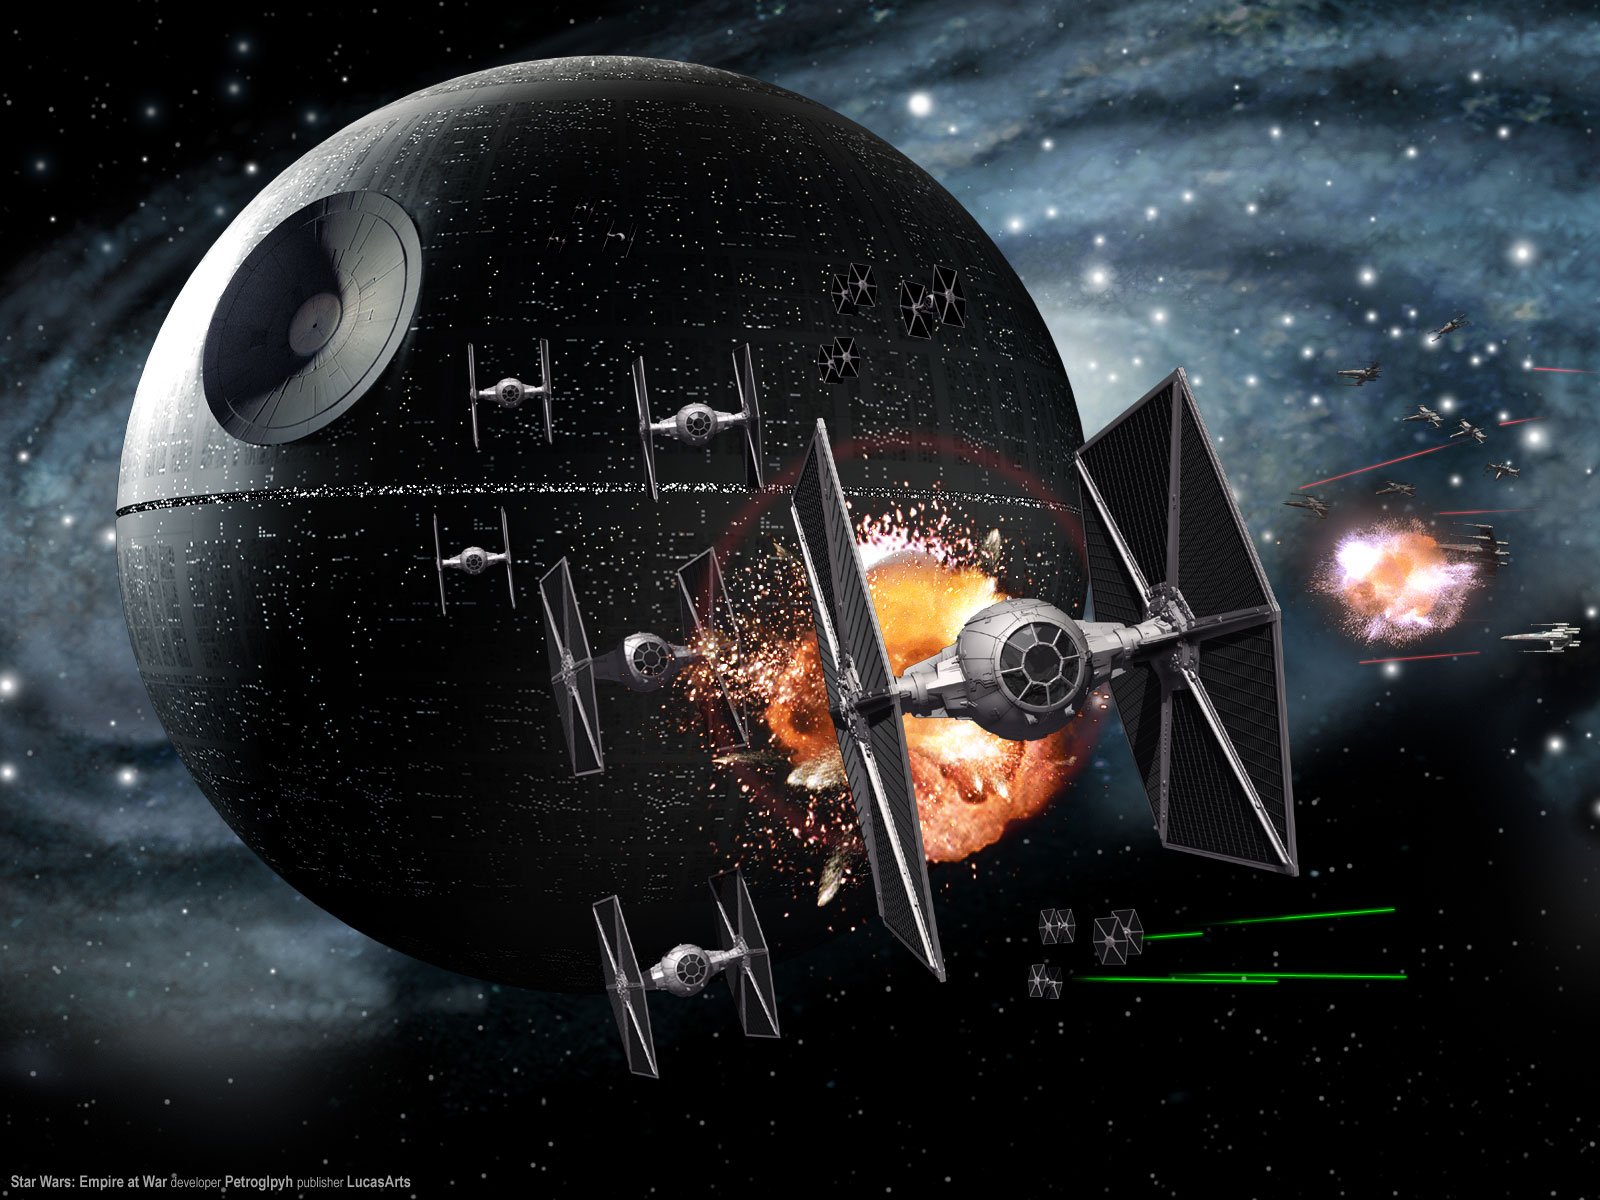 Star Wars Digital Space 4K HD Wallpapers  HD Wallpapers  ID 31386